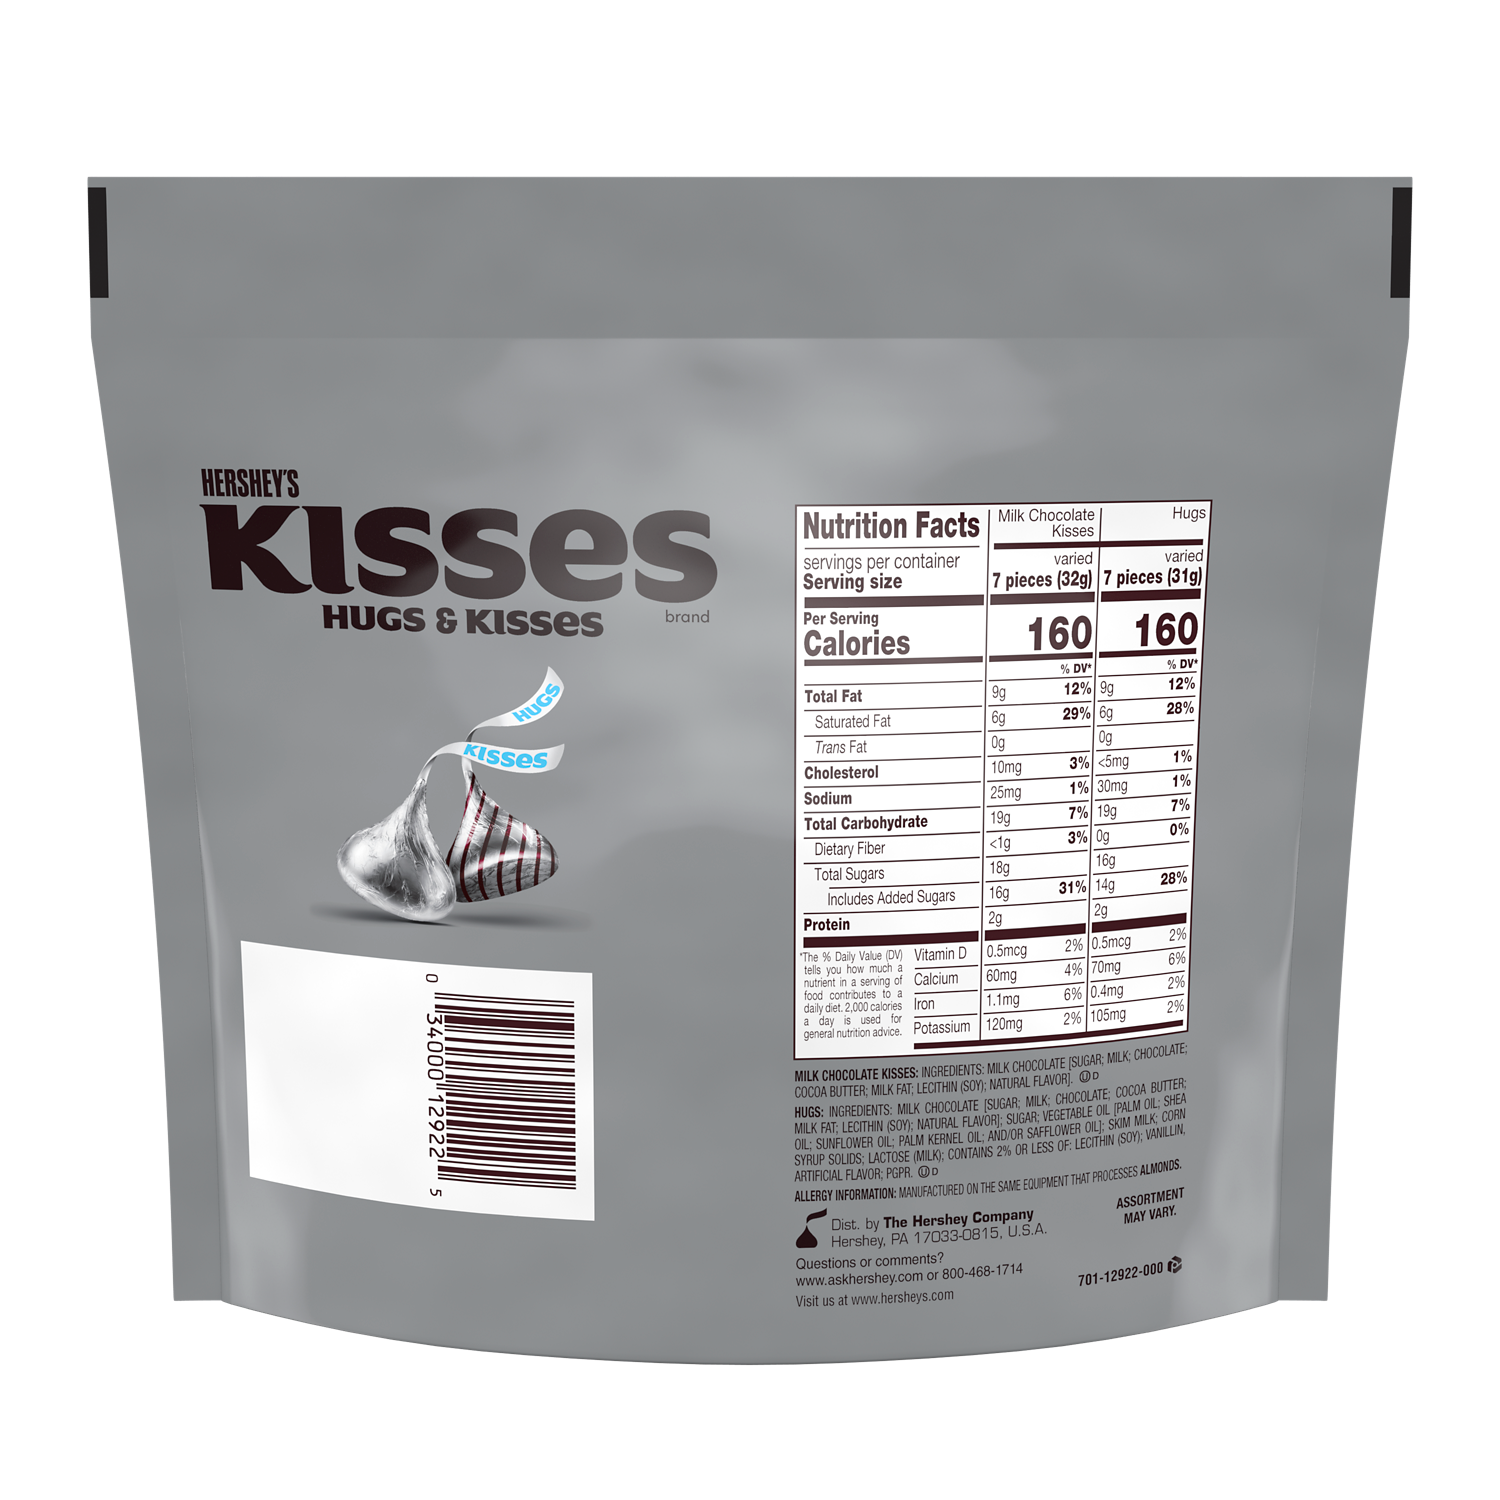 HERSHEY'S HUGS & KISSES Milk Chocolate Assortment, 15.6 oz pack - Back of Package